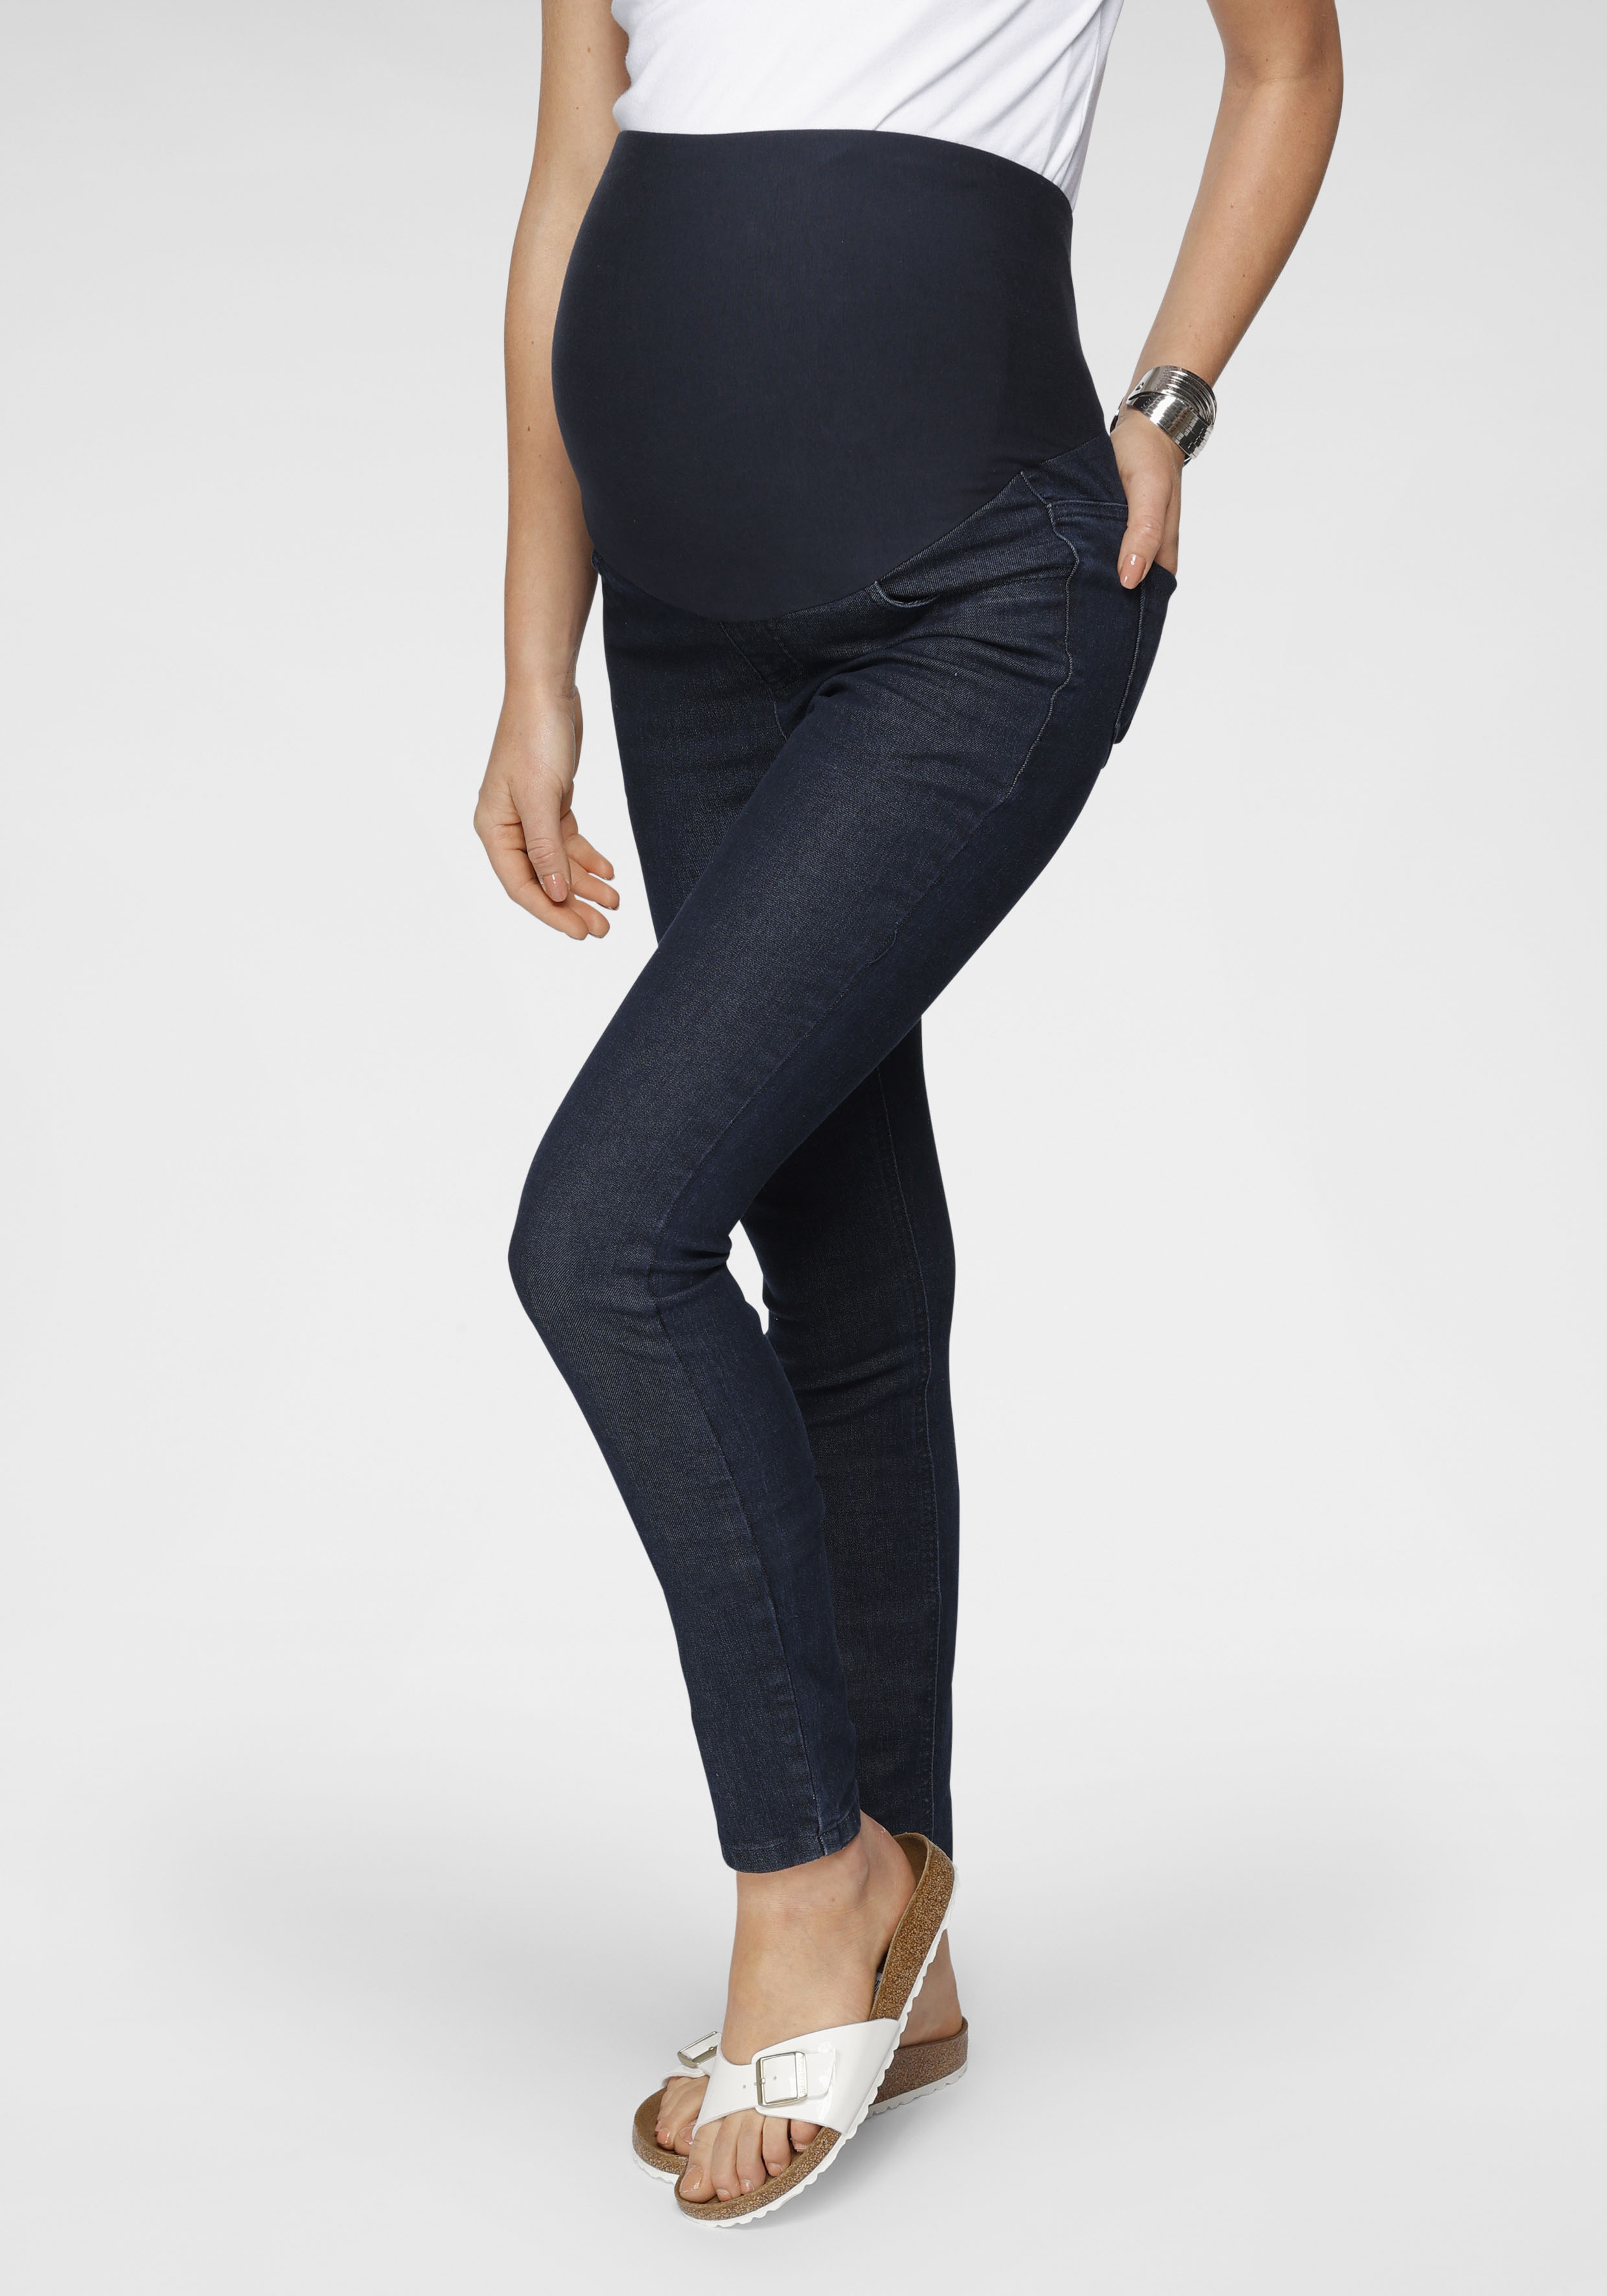 Neun Monate Umstandsjeans », Jeans für Schwangerschaft und Stillzeit«, in modischer Waschung-Neun Monate 1